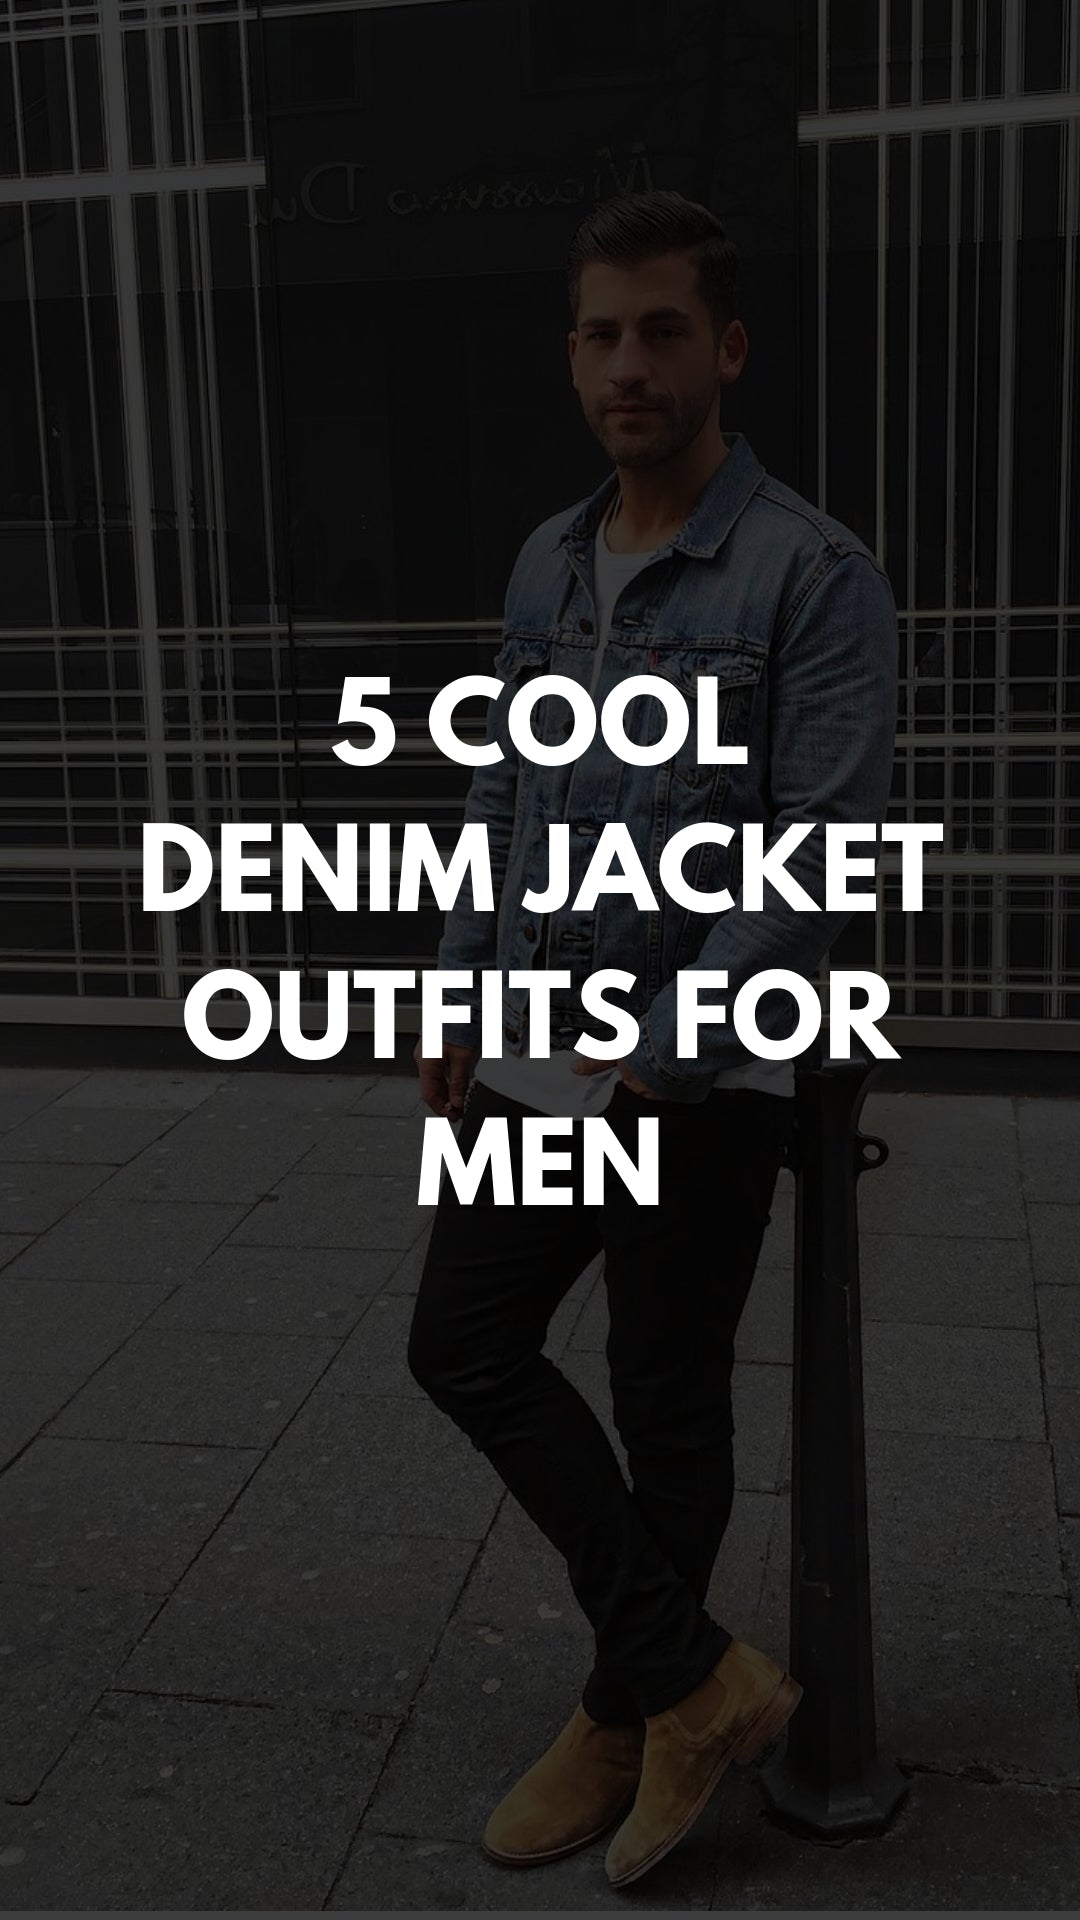 5 Denim Jacket Outfits For Men #denimjacket #outfits #mensfashion